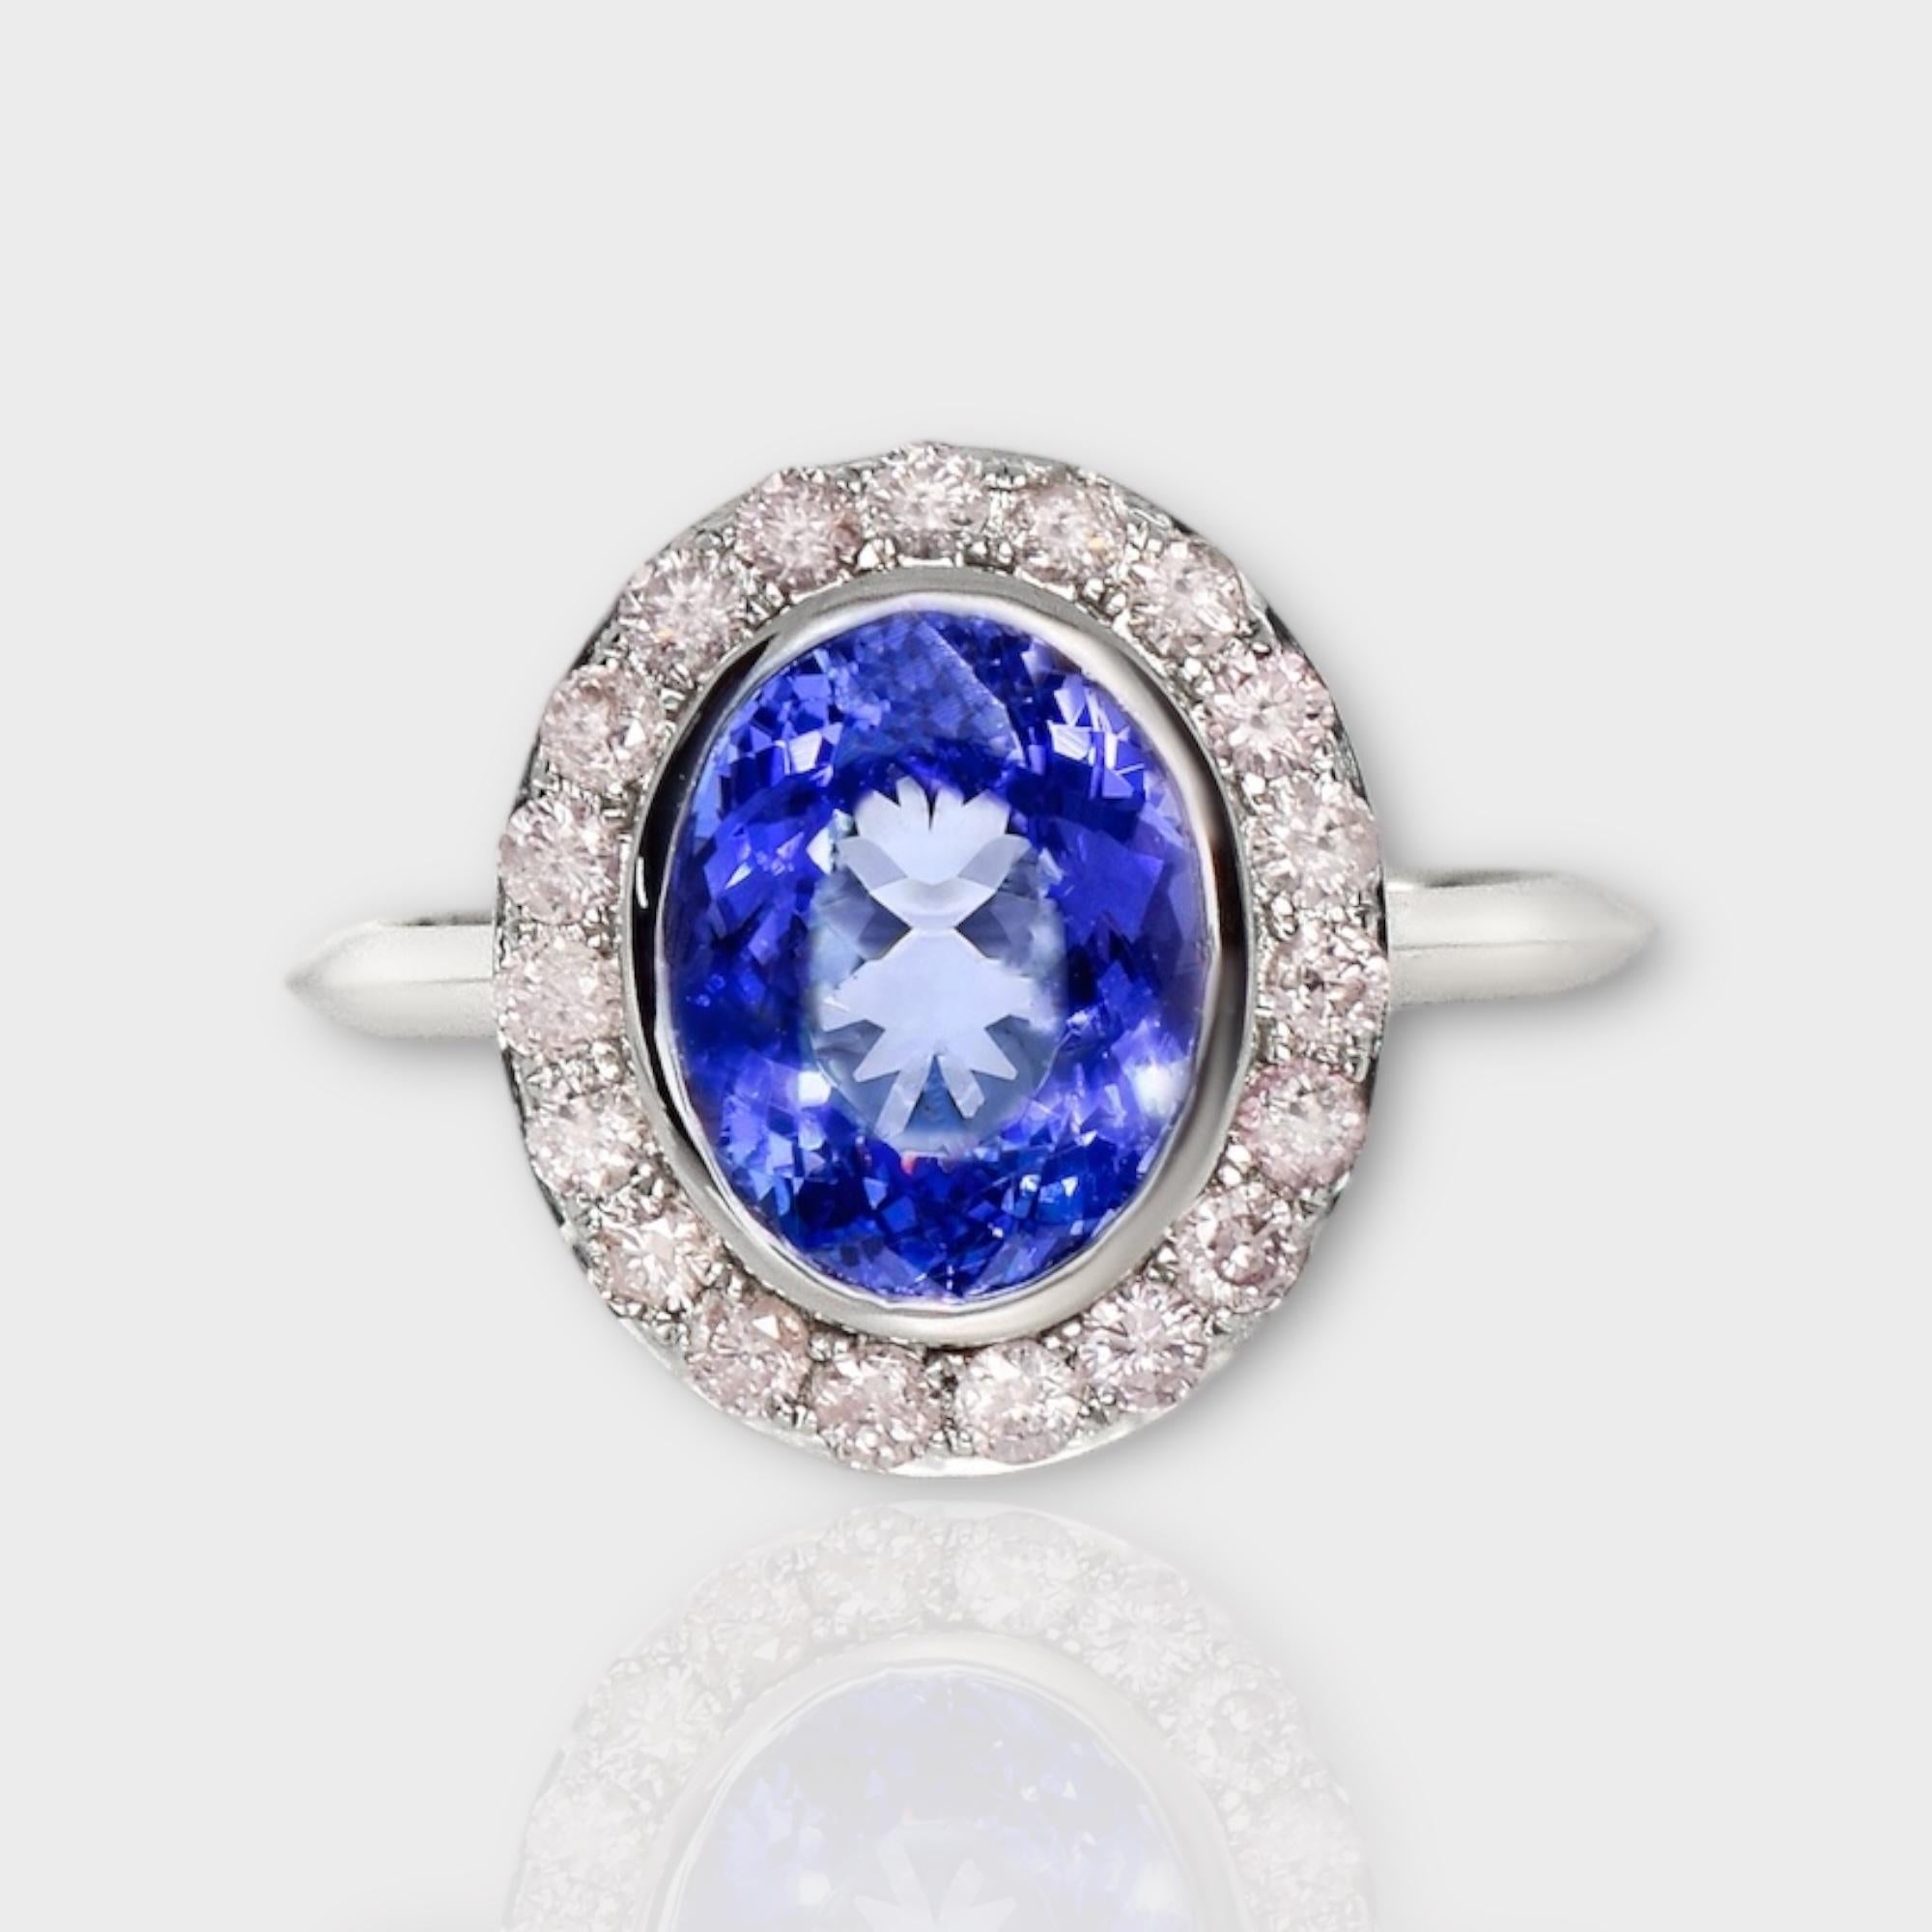 *IGI 14K 2.88 ct Tanzanite&Pink Diamond Antique Art Deco Style Engagement Ring*
The natural intense bluish violet tanzanite, weighing 2.88 ct, is the center stone surrounded by natural pink diamonds weighing 0.44 ct on the 14K white gold halo design